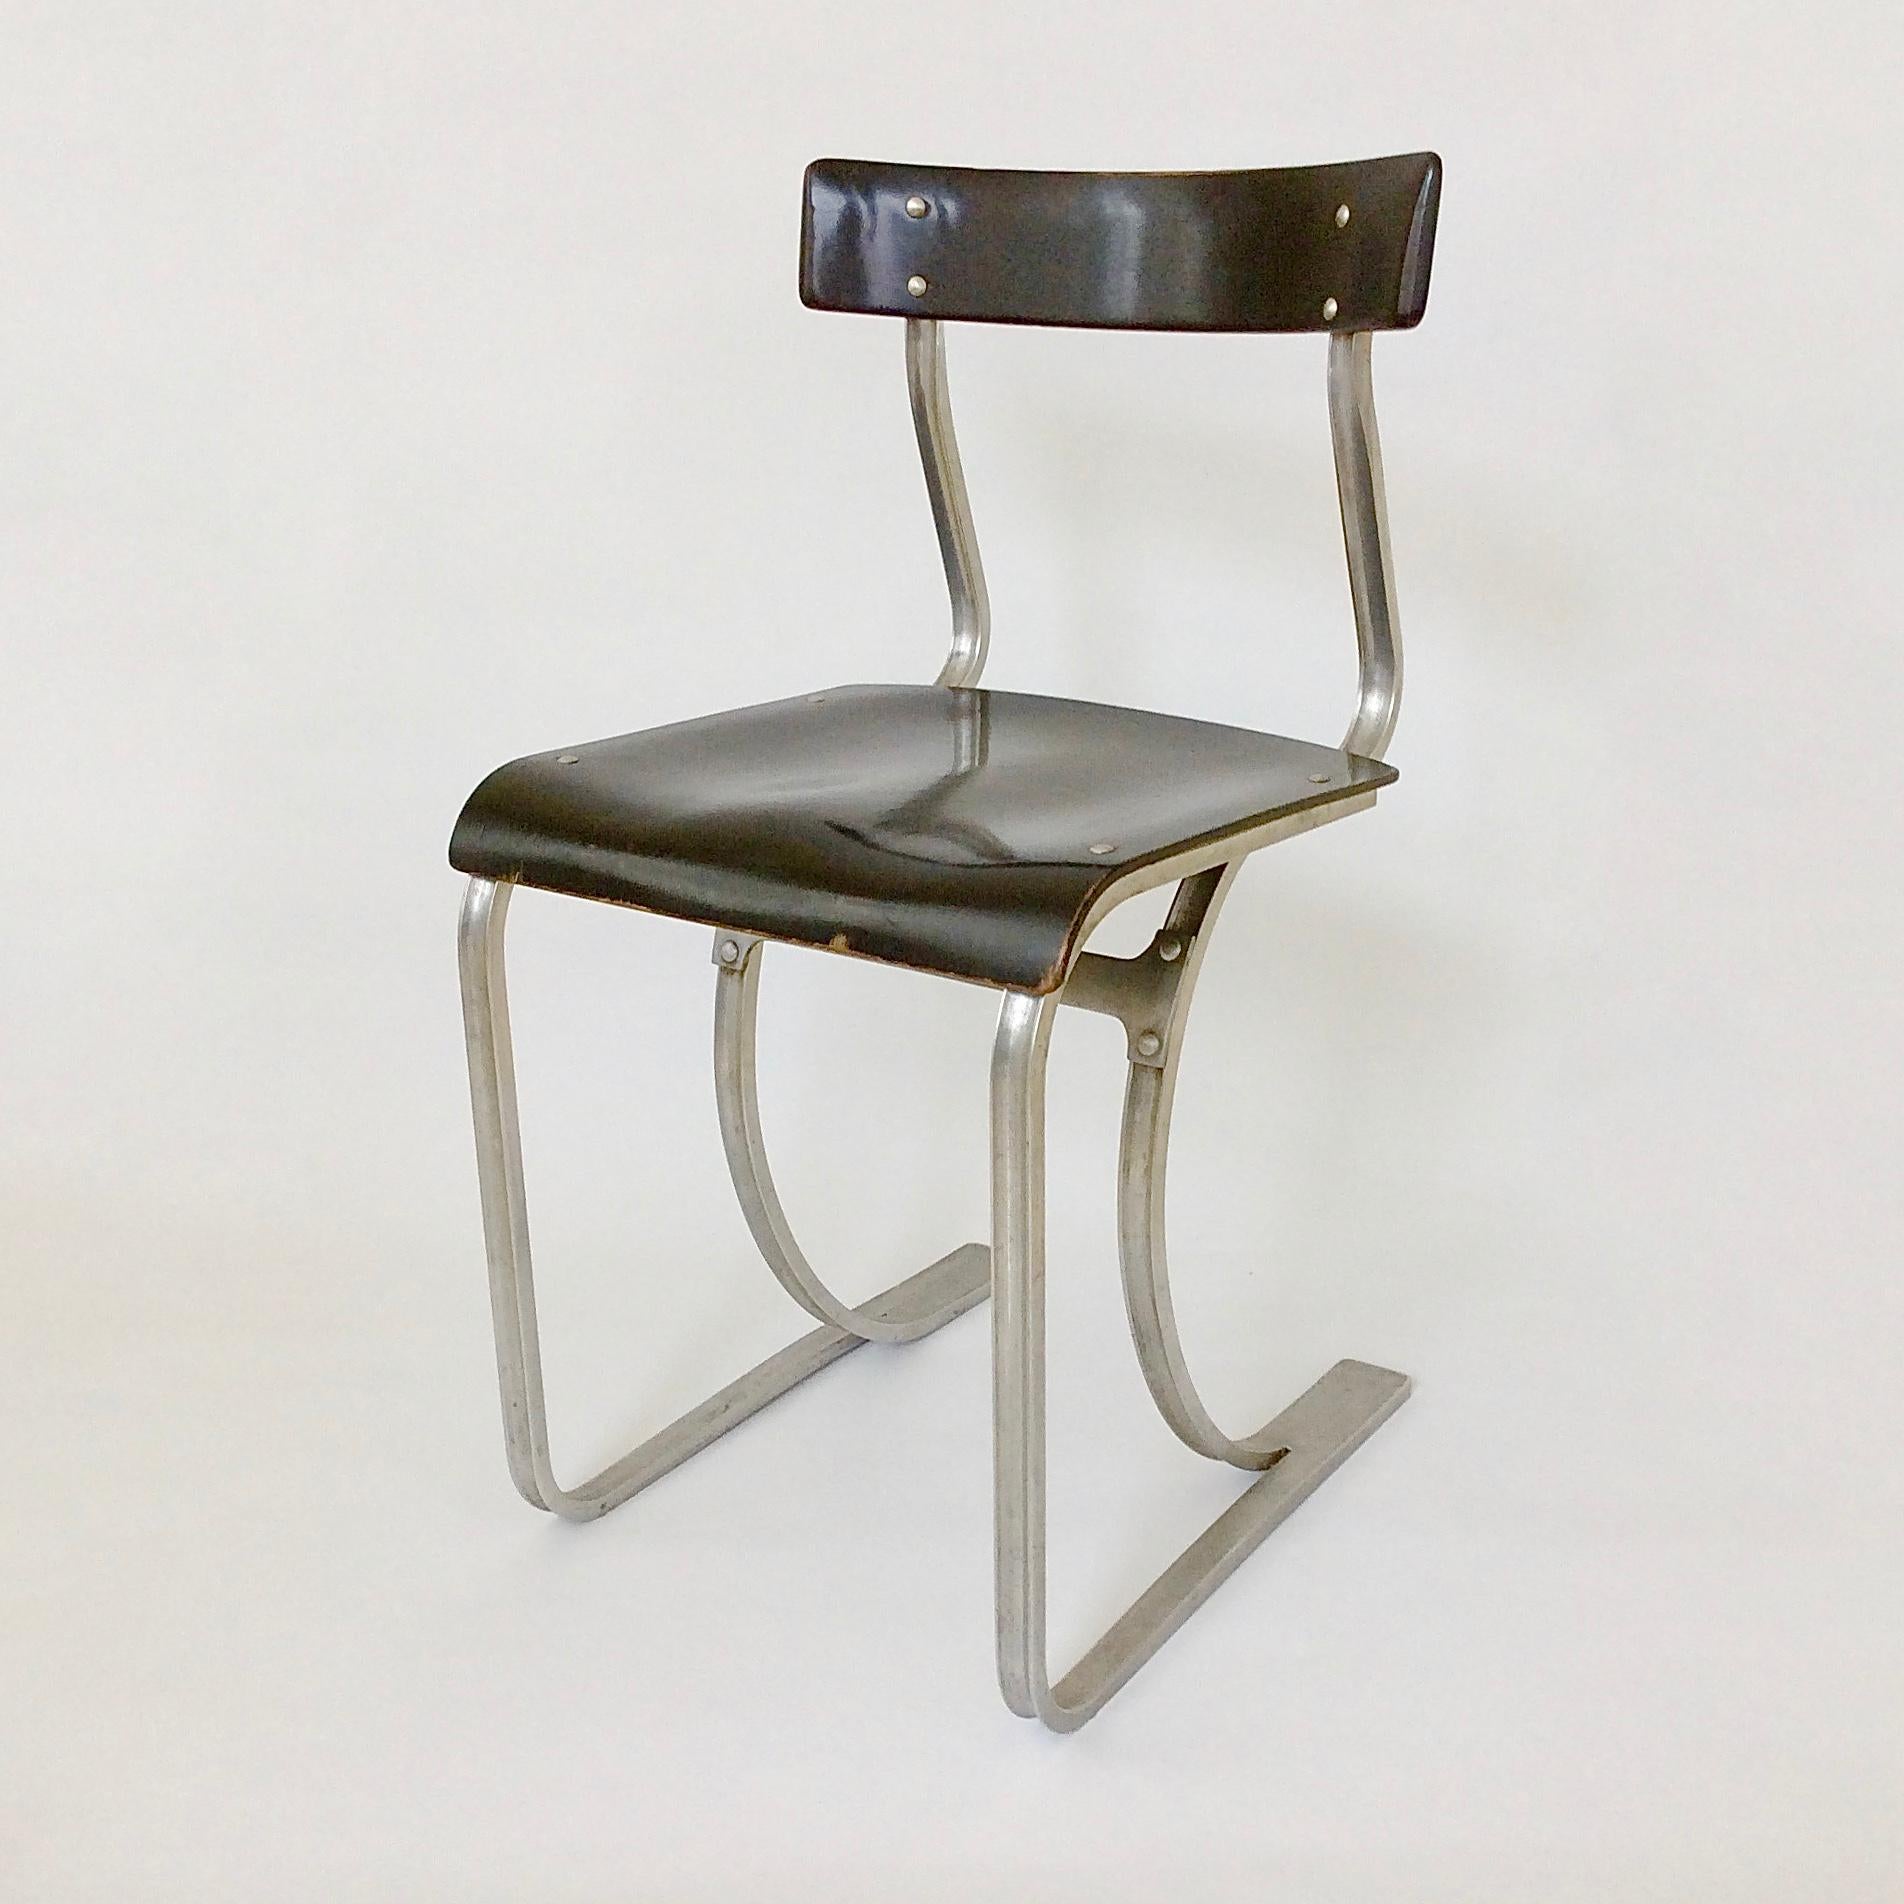 Rare Marcel Breuer (1902-1981) chair model no. WB 301, for Wohnbedarf, circa 1932.
Bent aluminium, black lacquered wood.
Dimensions: 73 cm H, 38 cm W, 42 cm D.
Good condition.
We ship worldwide.
 